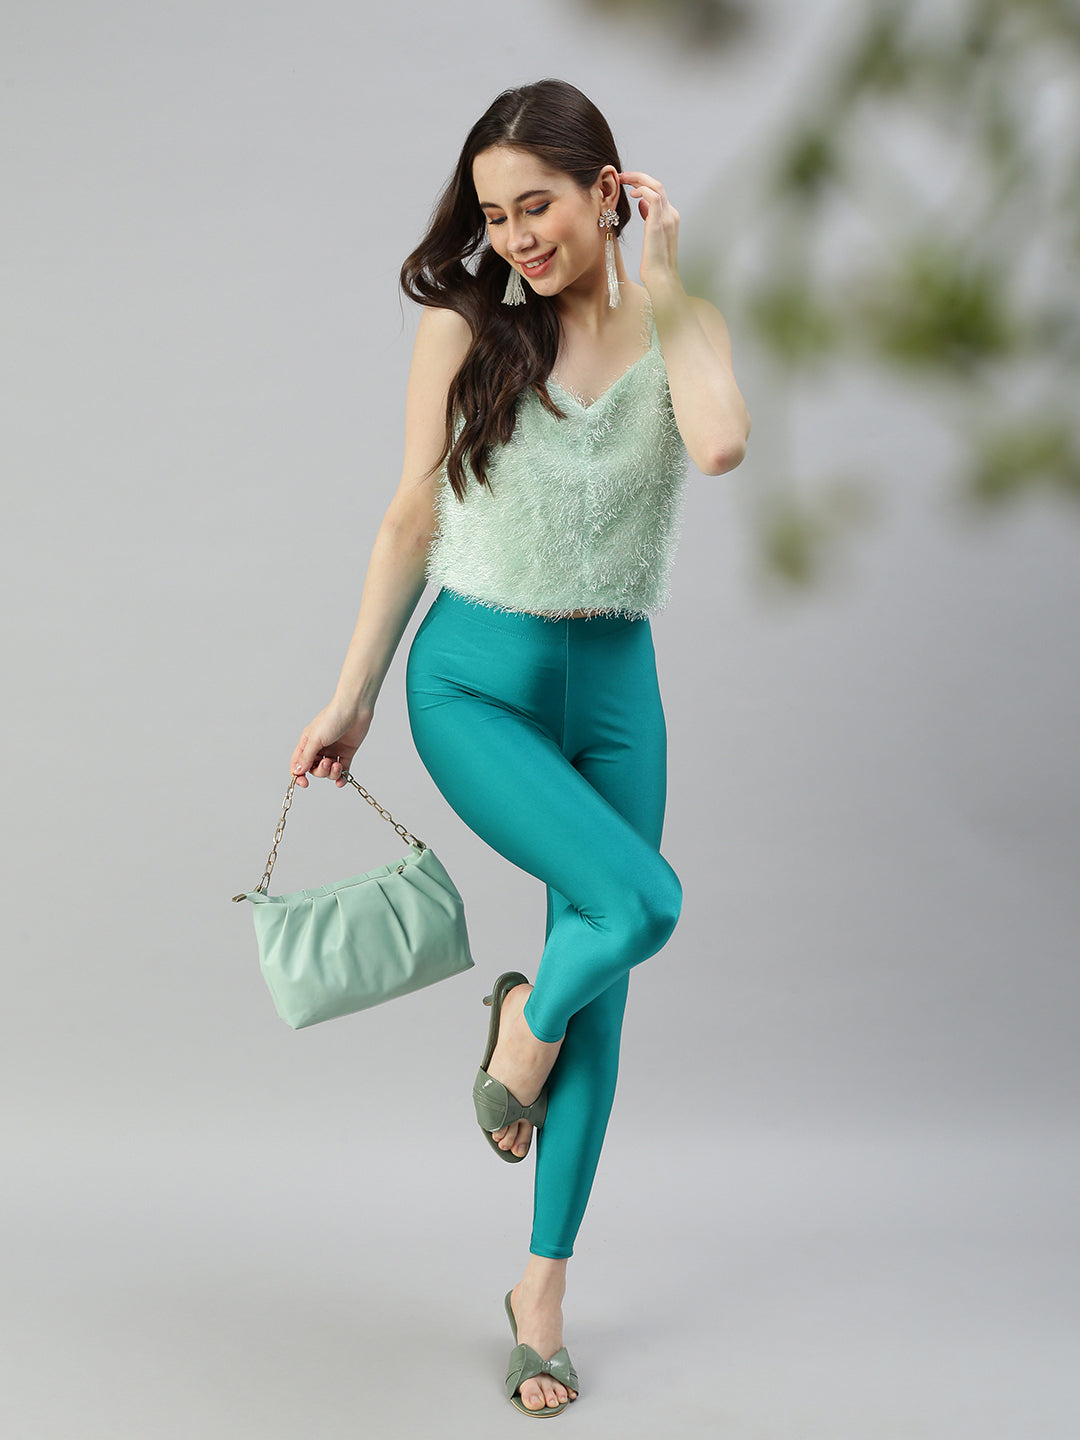 Buy GO COLORS Women Silver Mid Rise Nylon Shimmer Leggings - S at Amazon.in